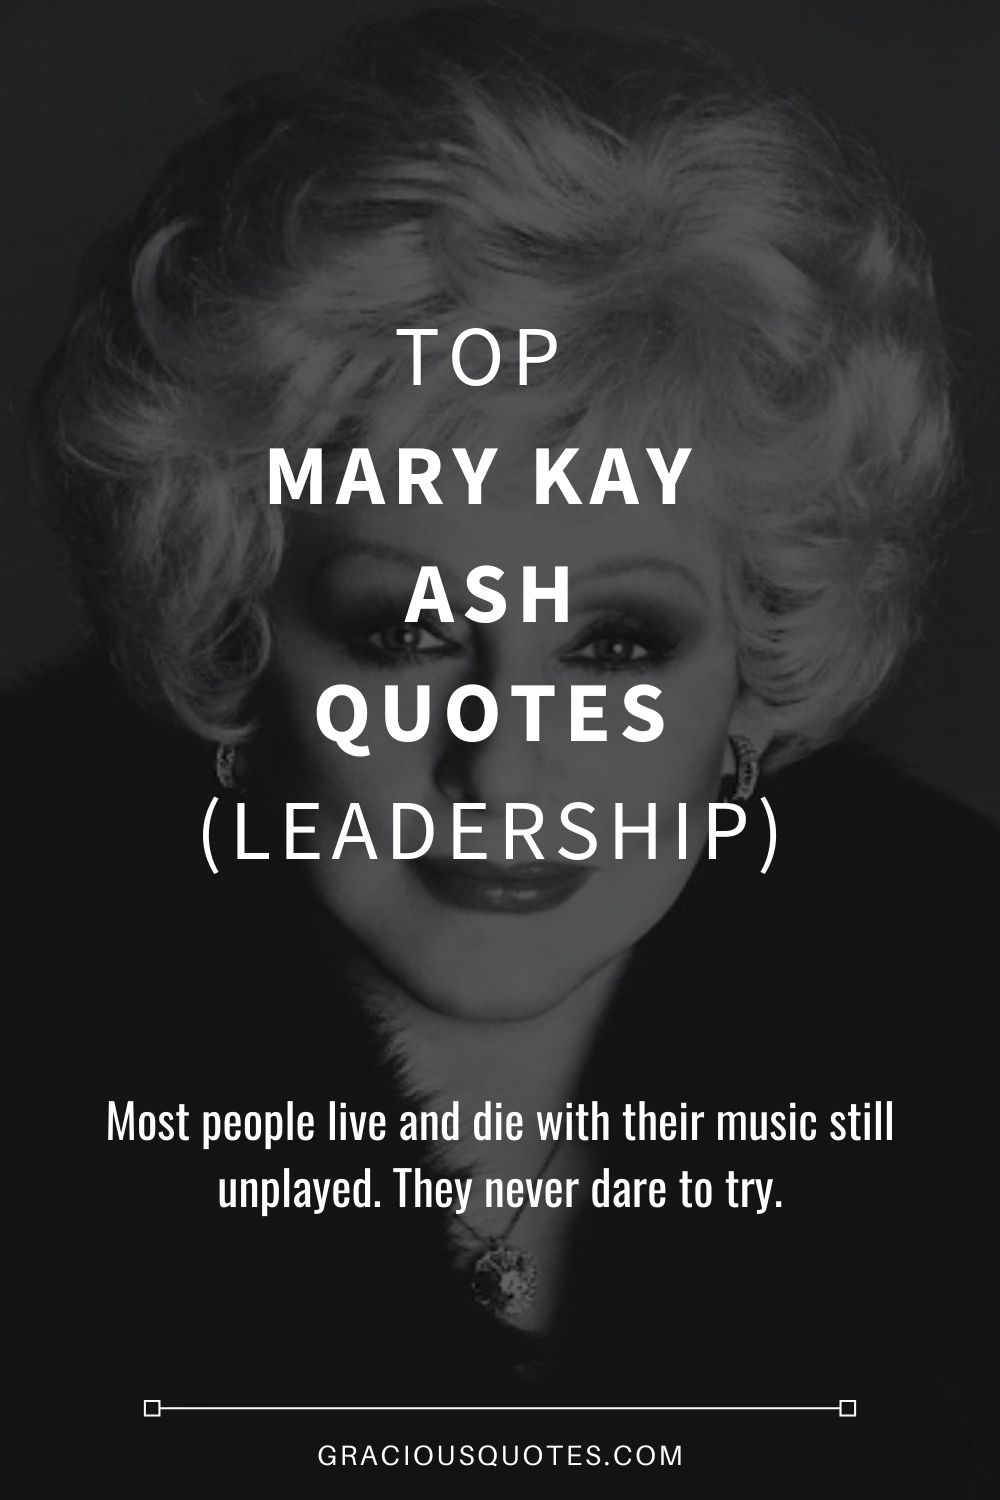 Top Mary Kay Ash Quotes (LEADERSHIP) - Gracious Quotes